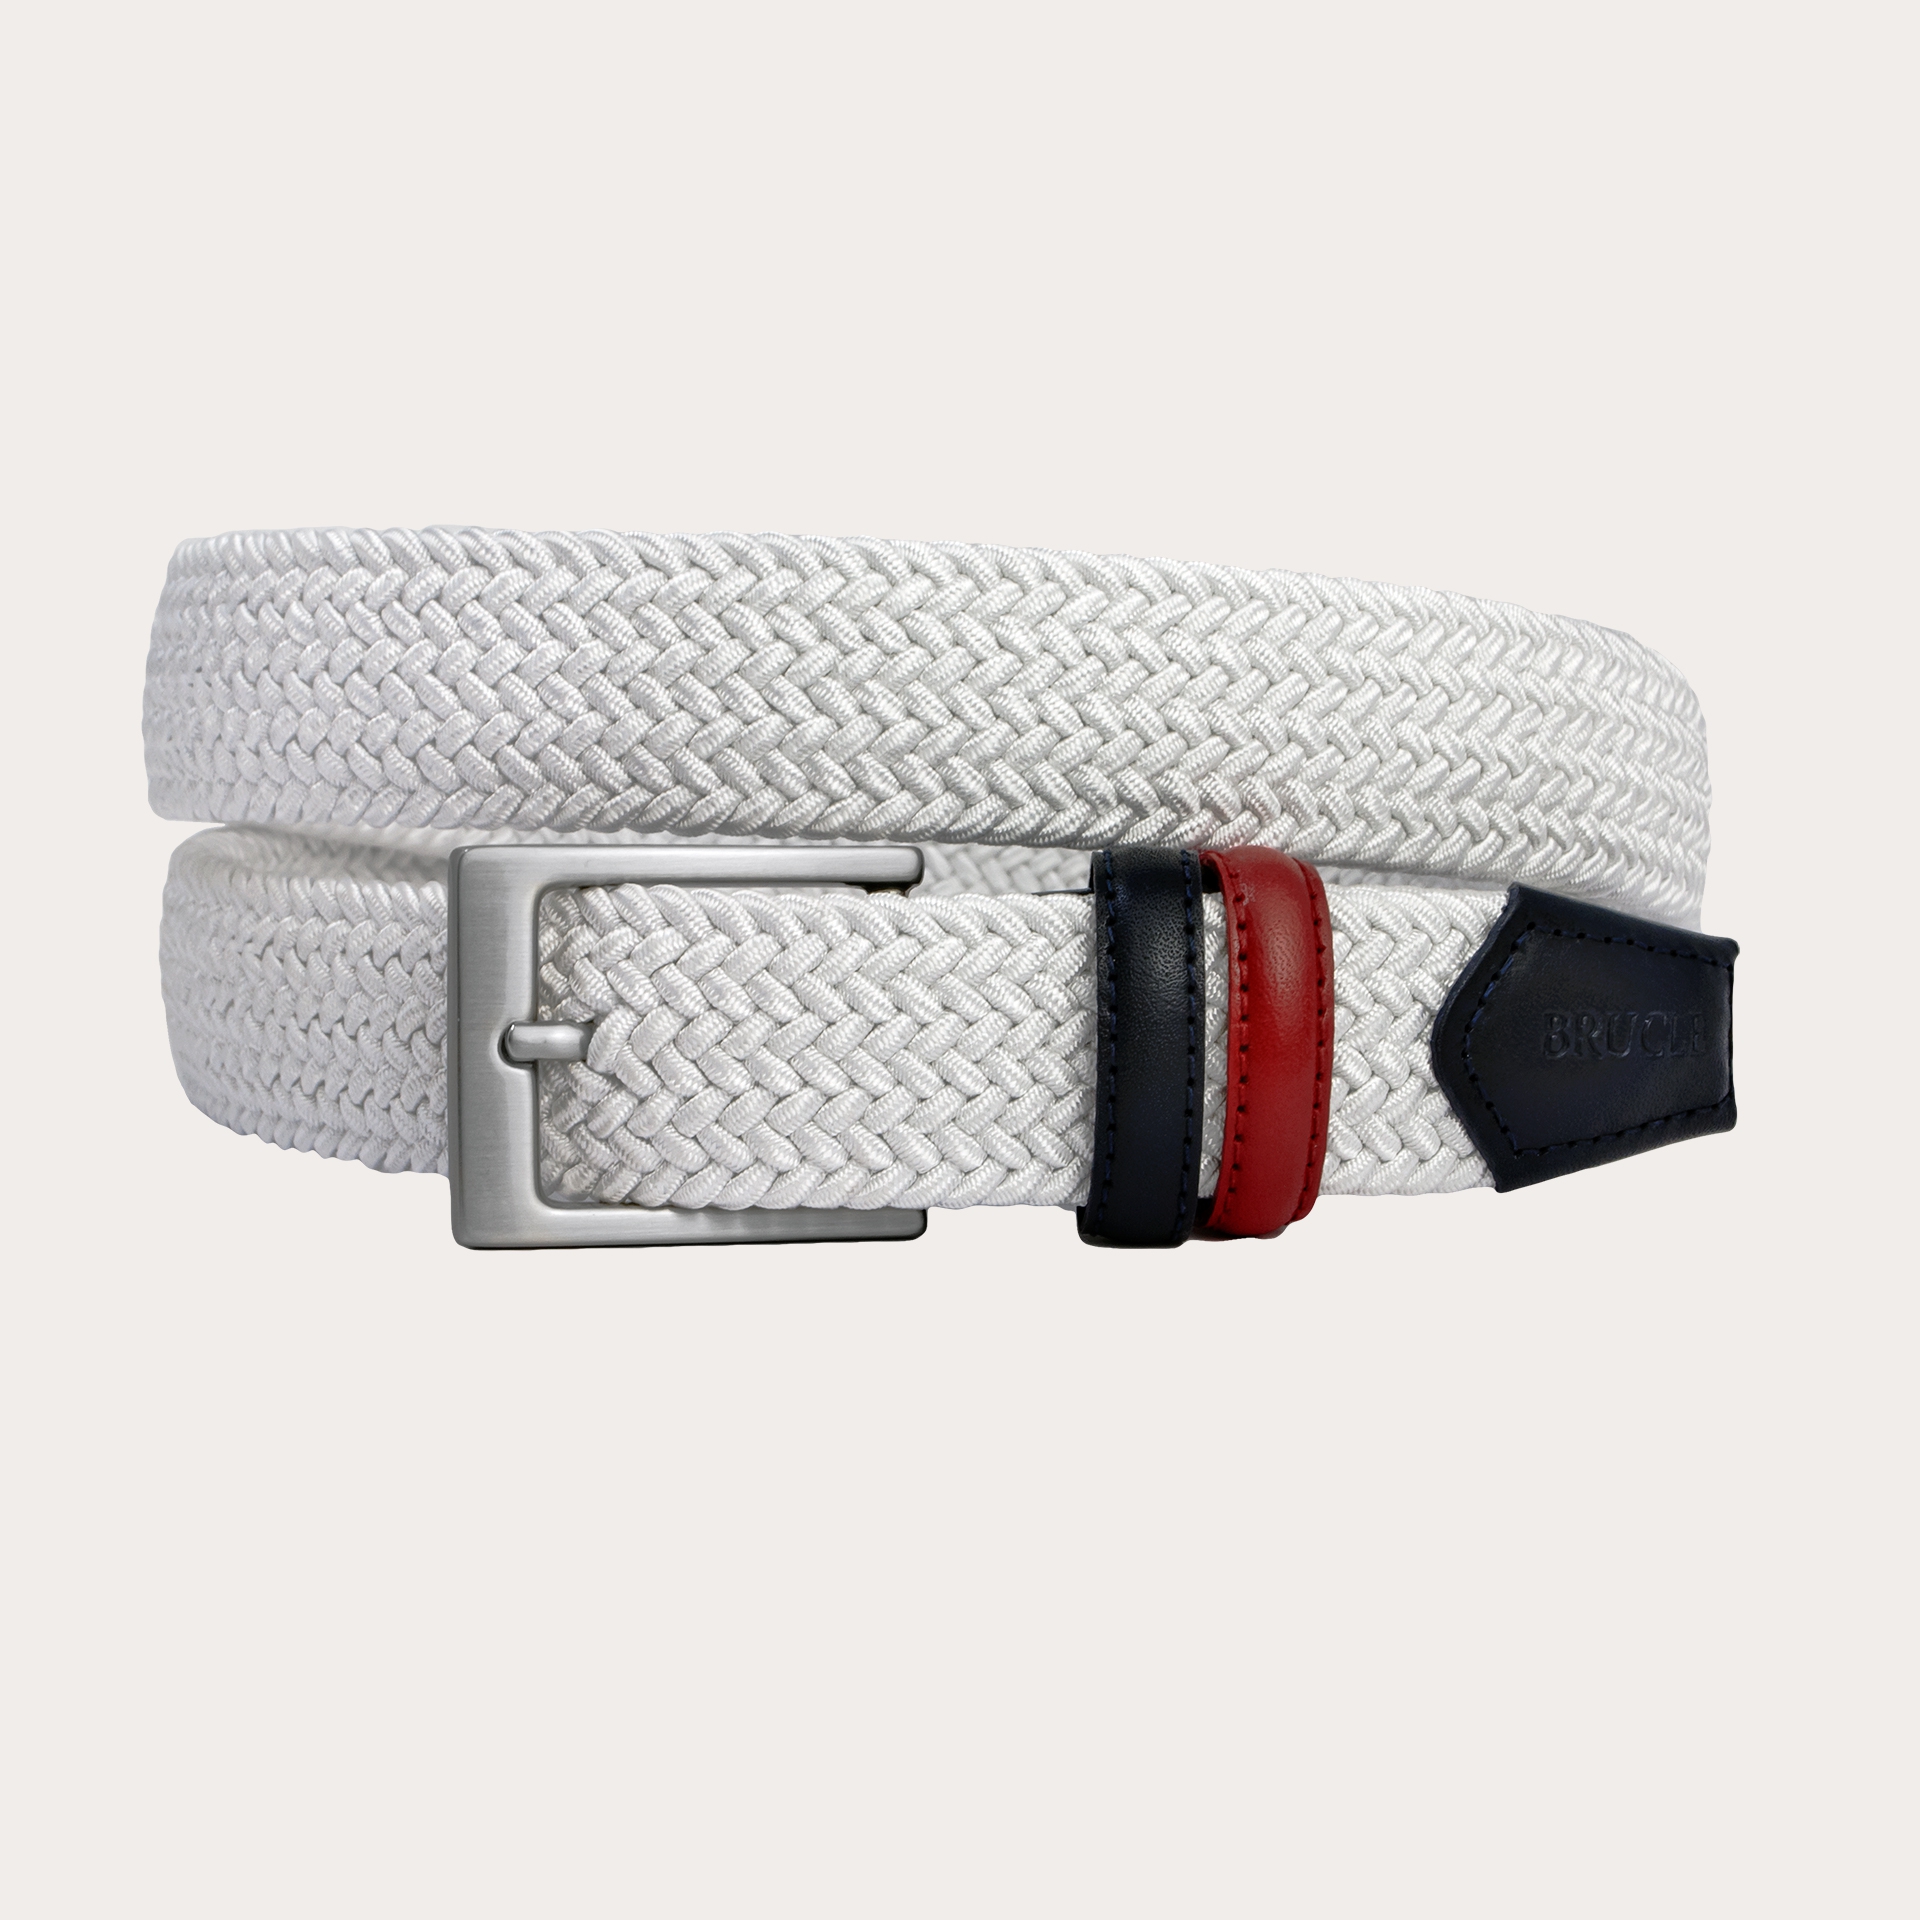 Cintura intrecciata elastica bianca con pelle colorata e sfumata a mano